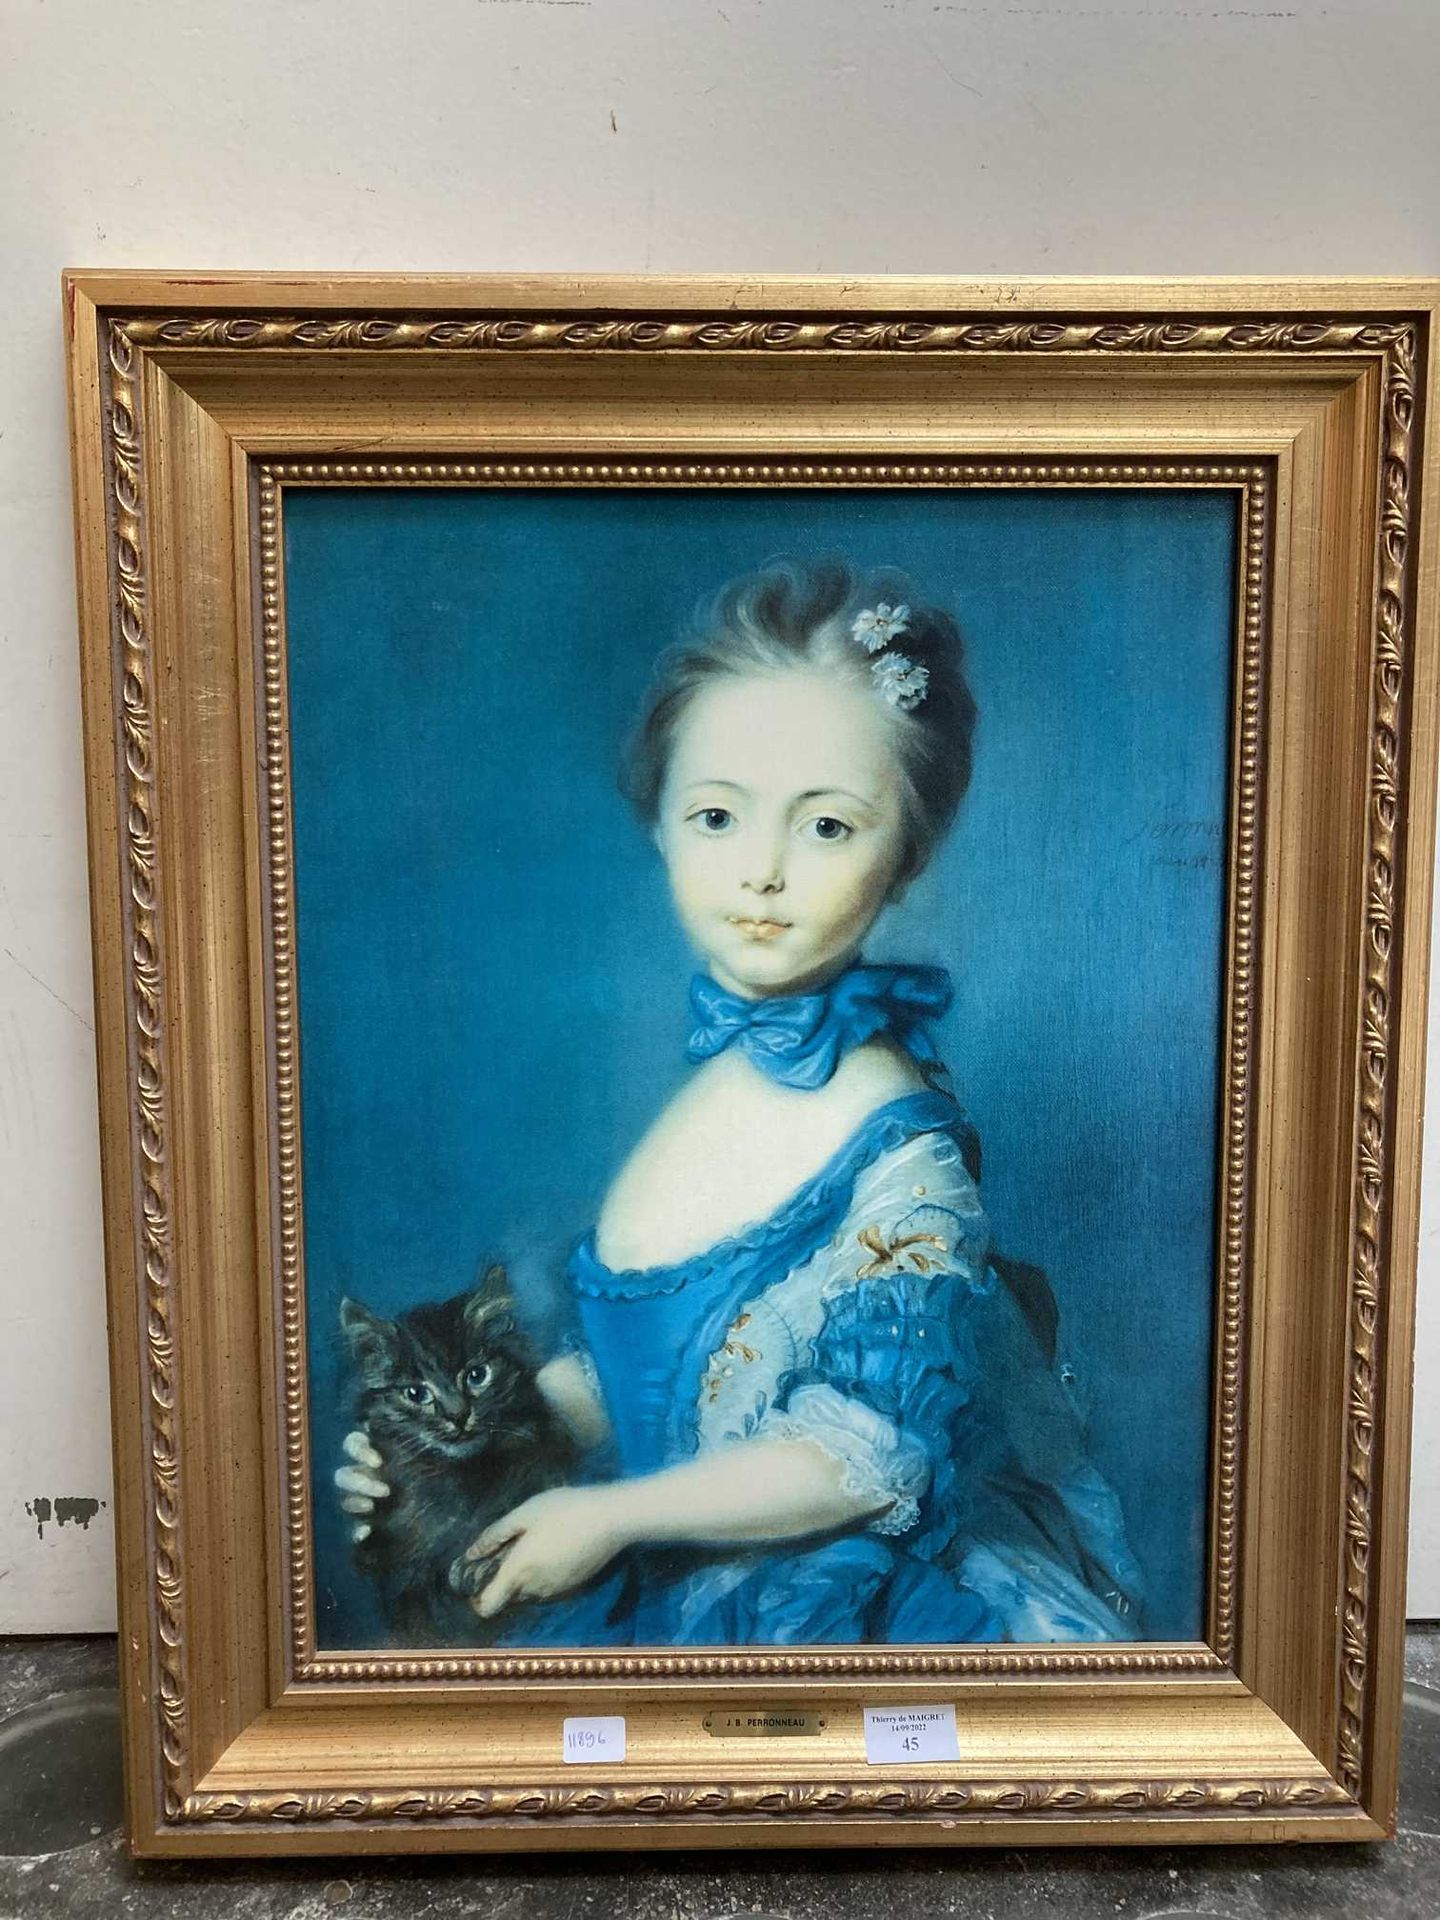 Null 表现一个年轻女孩和一只猫的18世纪风格的帆布印刷品

48 x 38 cm

(小的凹痕)